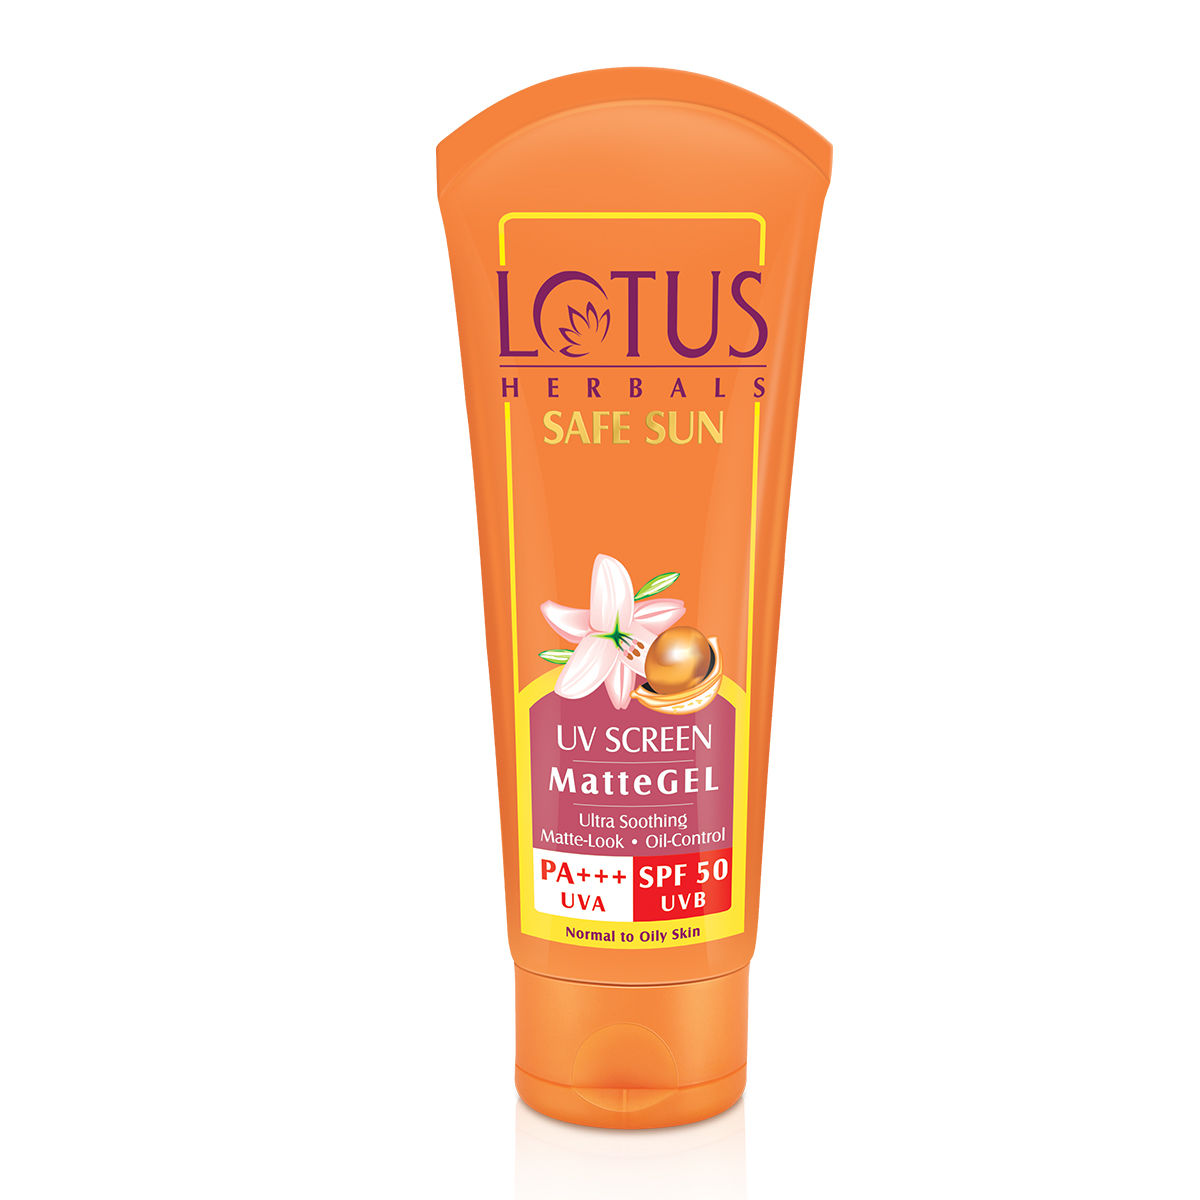 Buy Lotus Herbals Safe Sun UV Screen Matte Gel SPF 50 PA+++ UVA-UVB, 100 gm Online